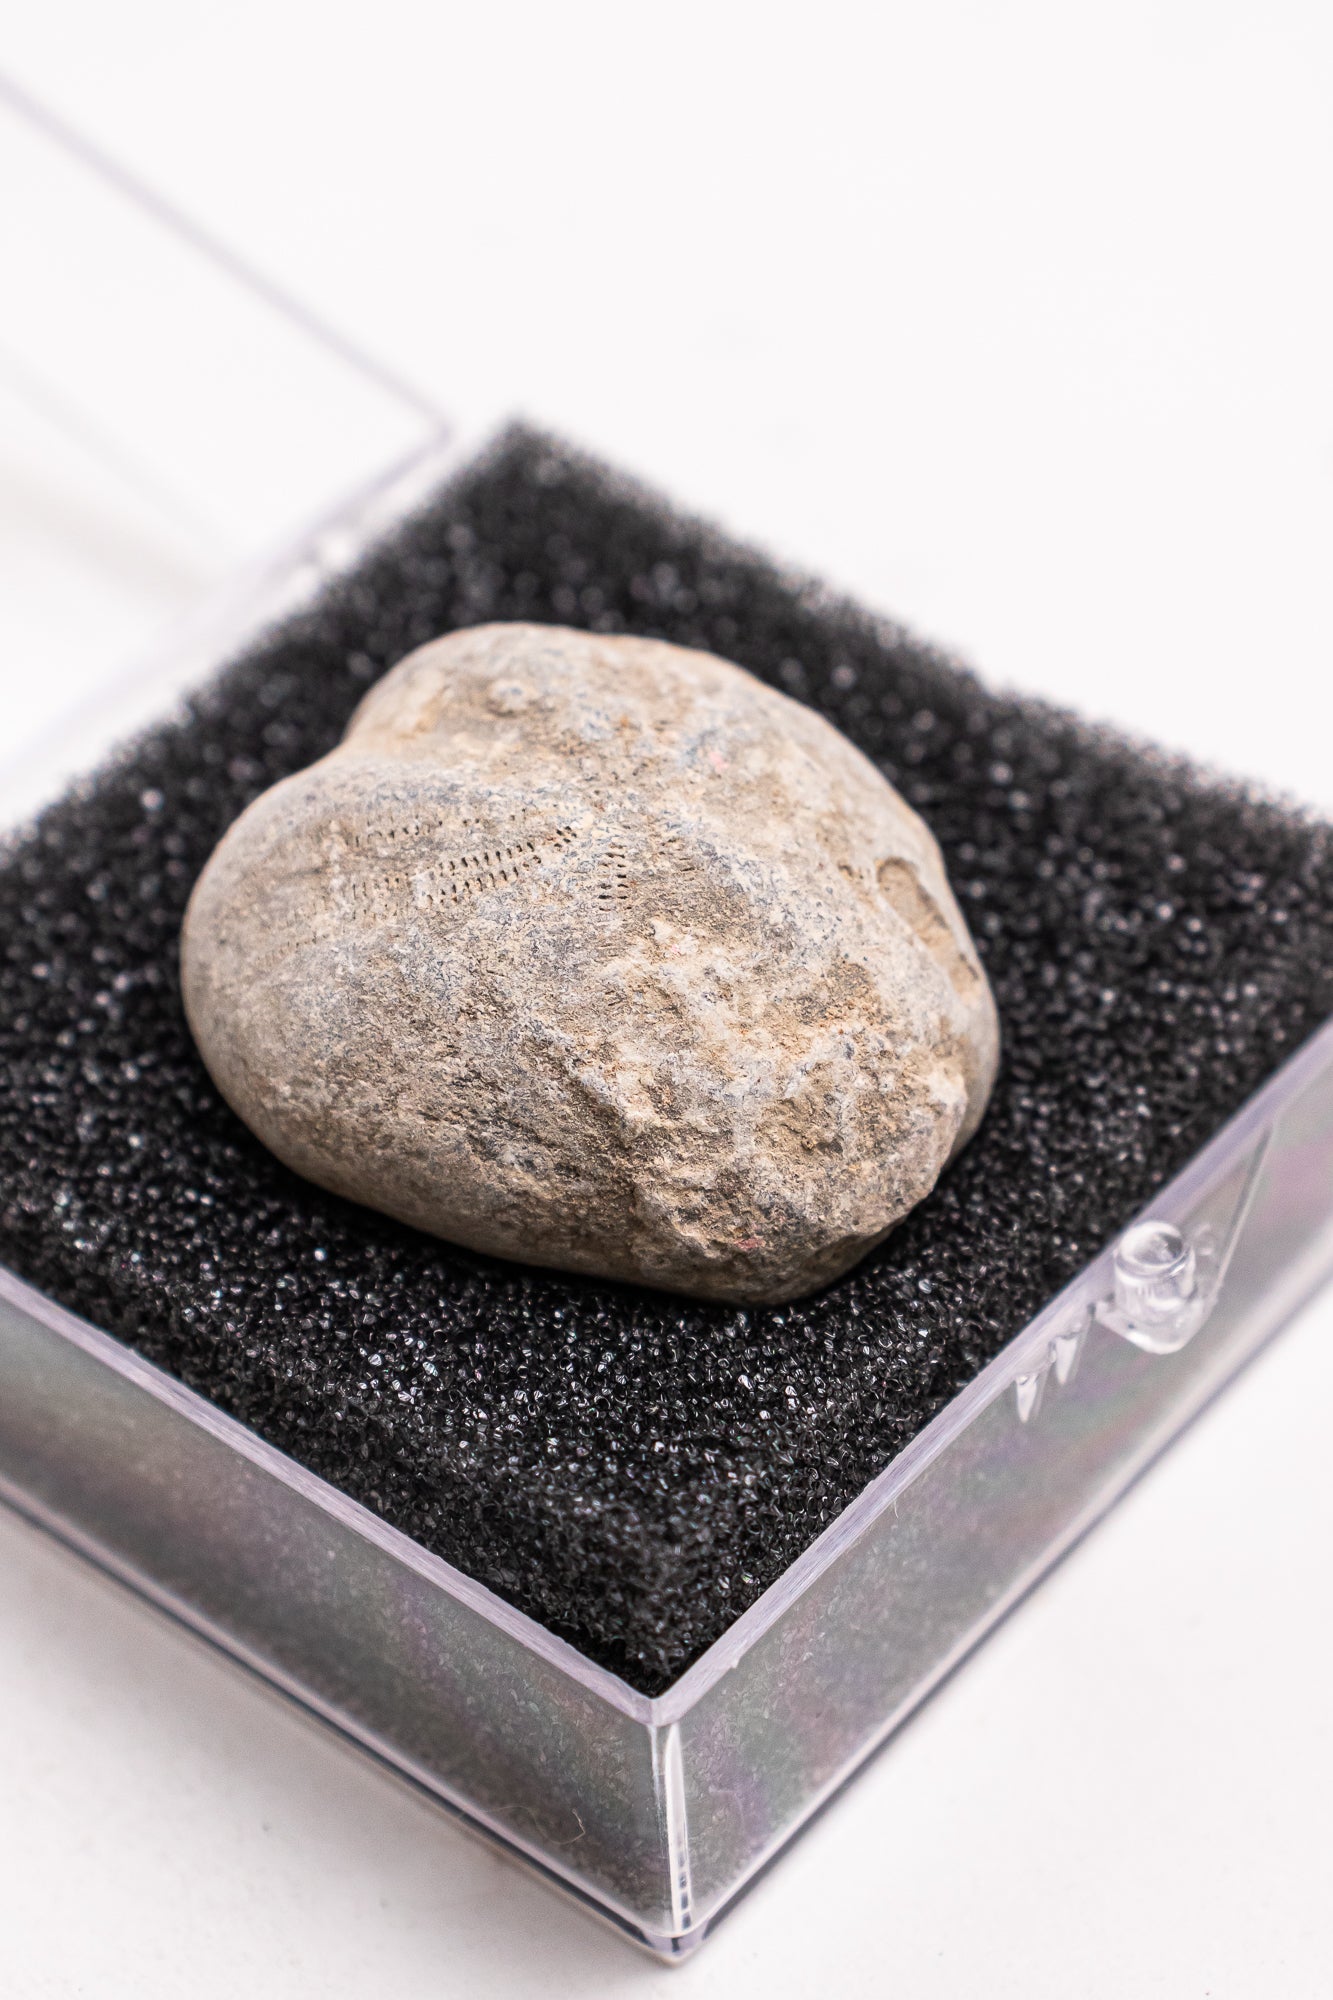 Heart Urchin Fossil - Stemcell Science Shop